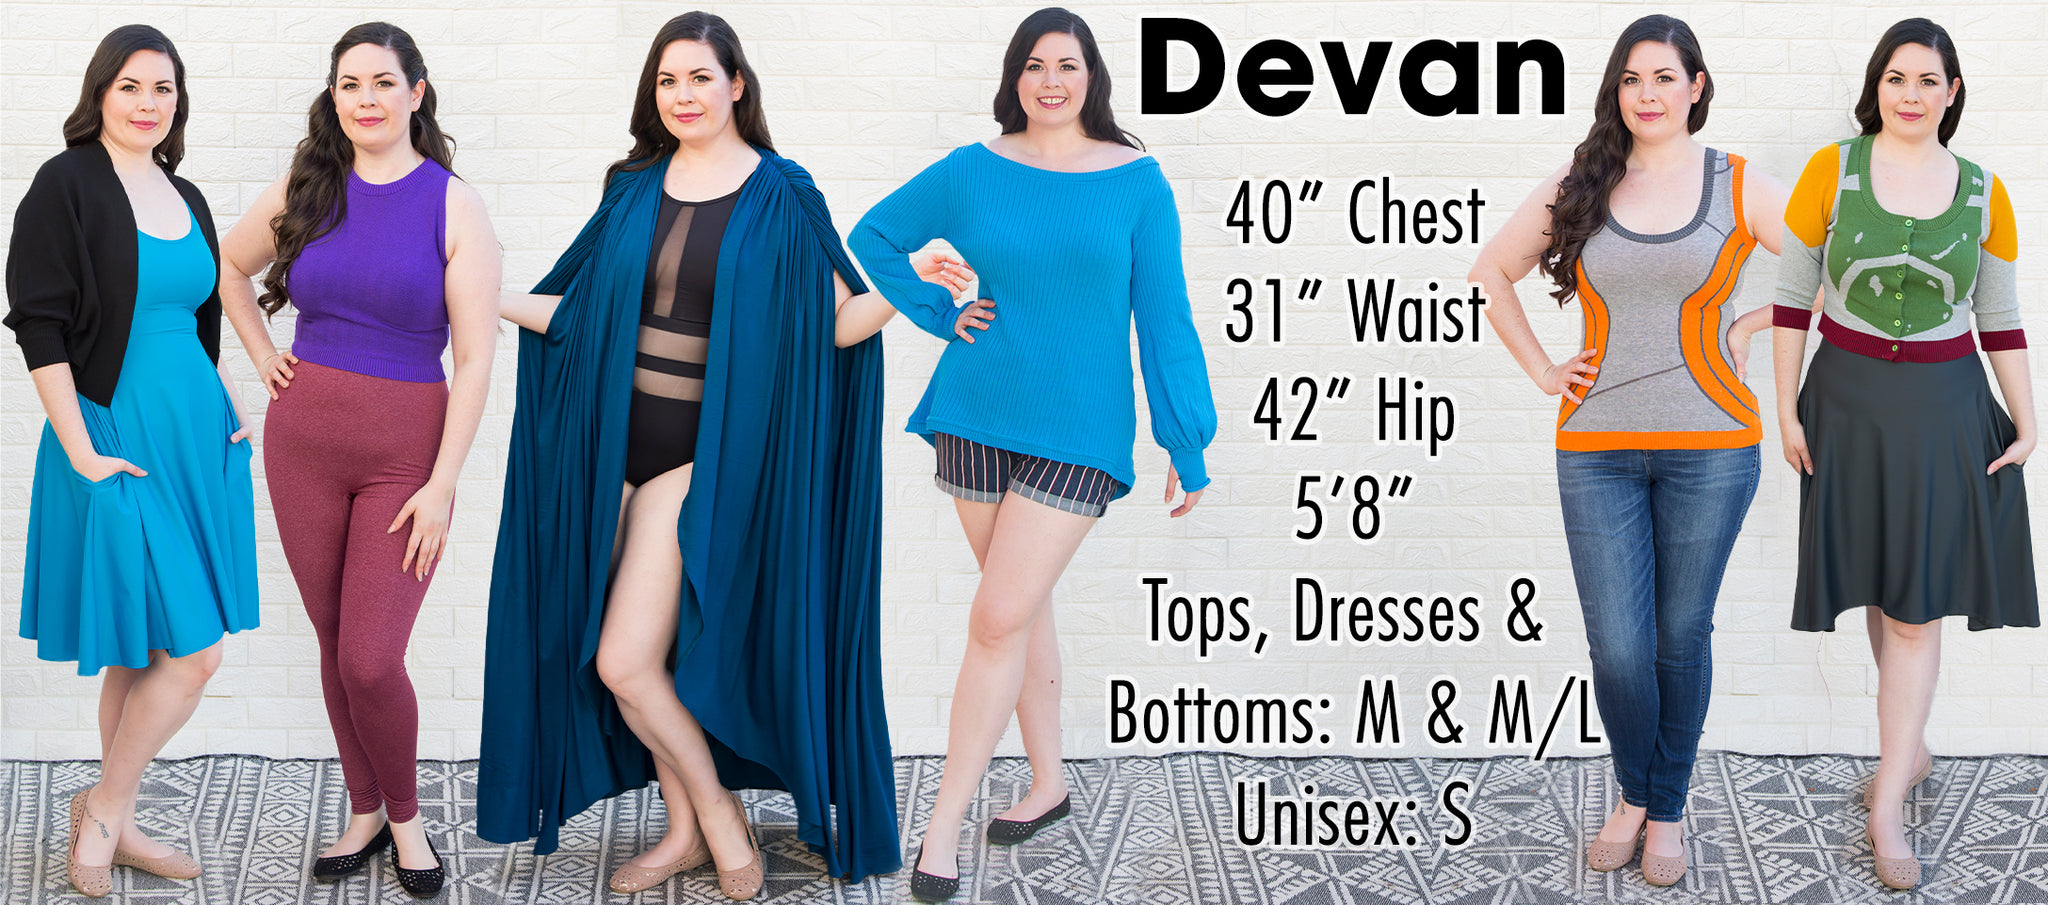 Devan - 40” Chest 31” Waist 42” Hip 5’8” Height - Tops, Dresses &  Bottoms: M & M/L - Unisex: S